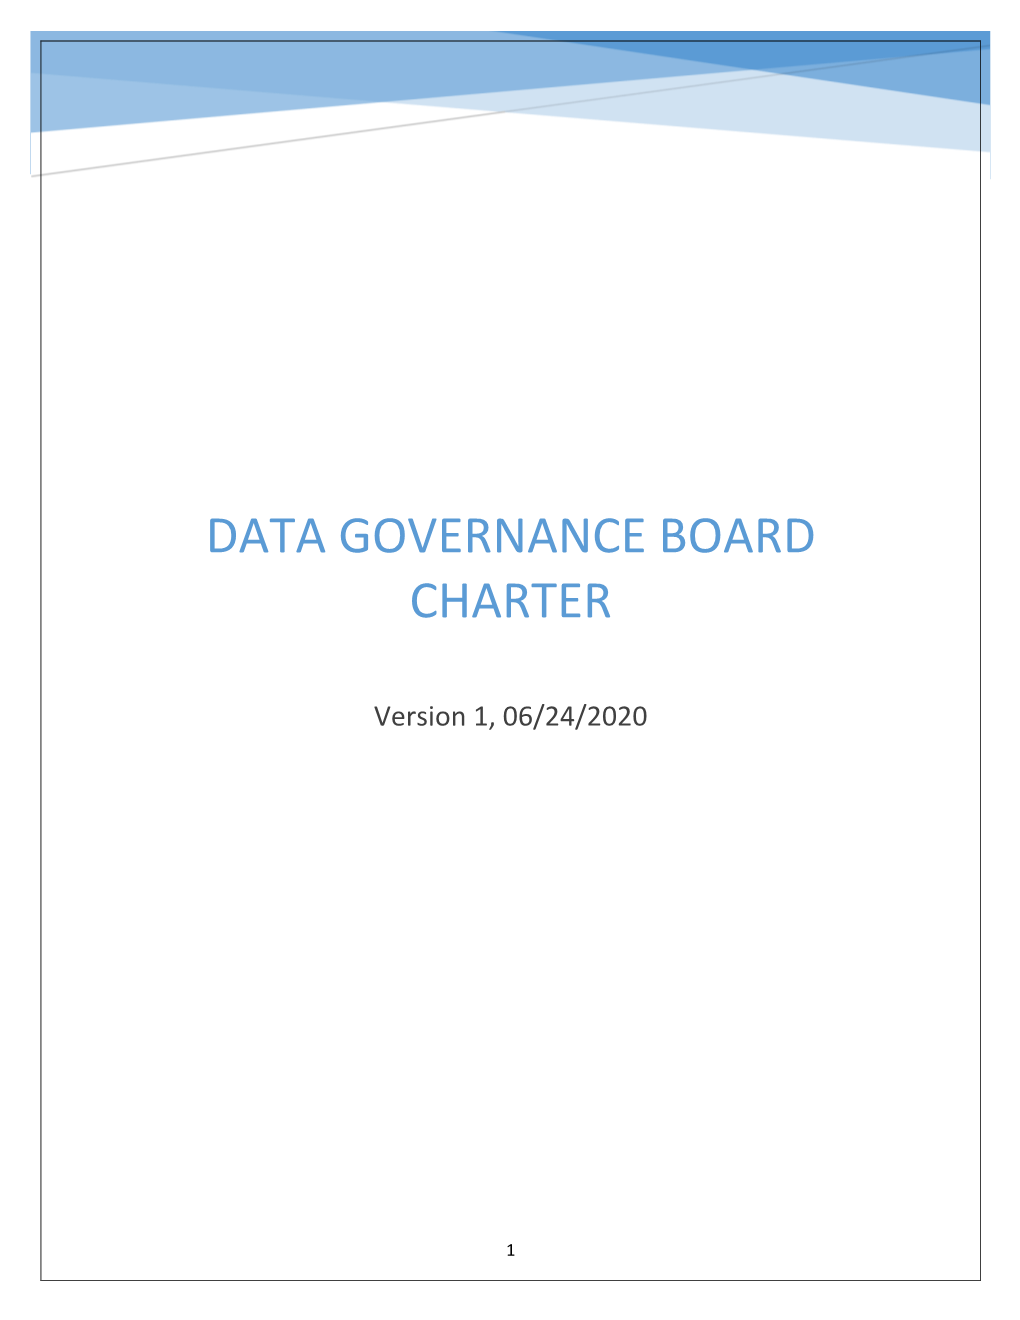 Data Governance Board Charter